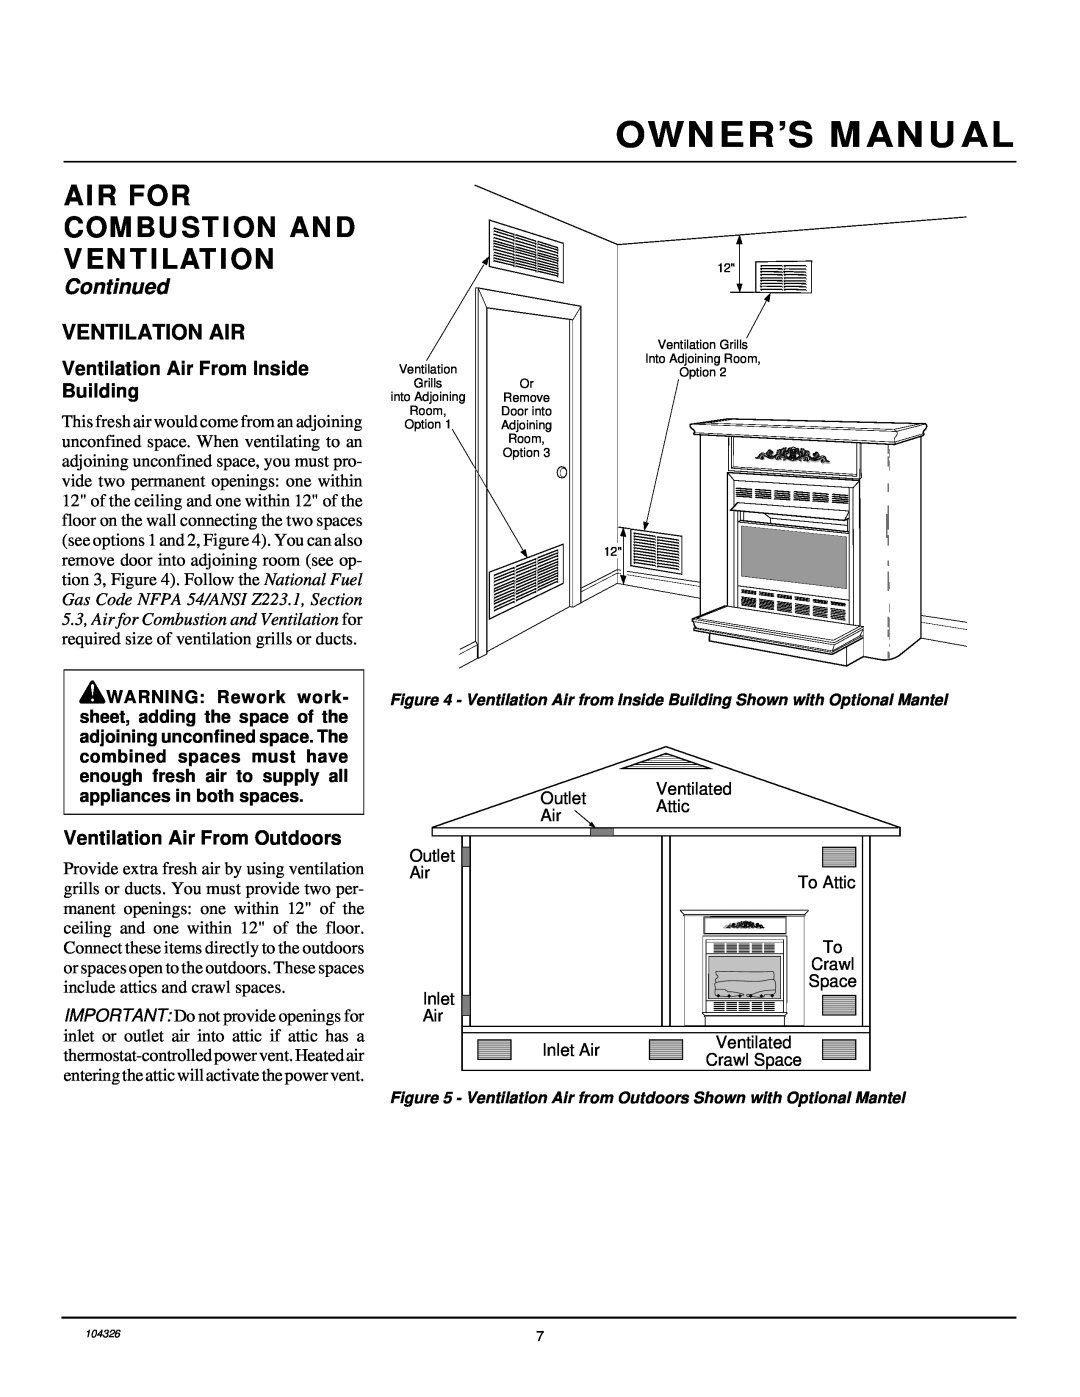 Desa CGCF26NR installation manual Air For Combustion And Ventilation, Continued, Ventilation Air From Inside Building 